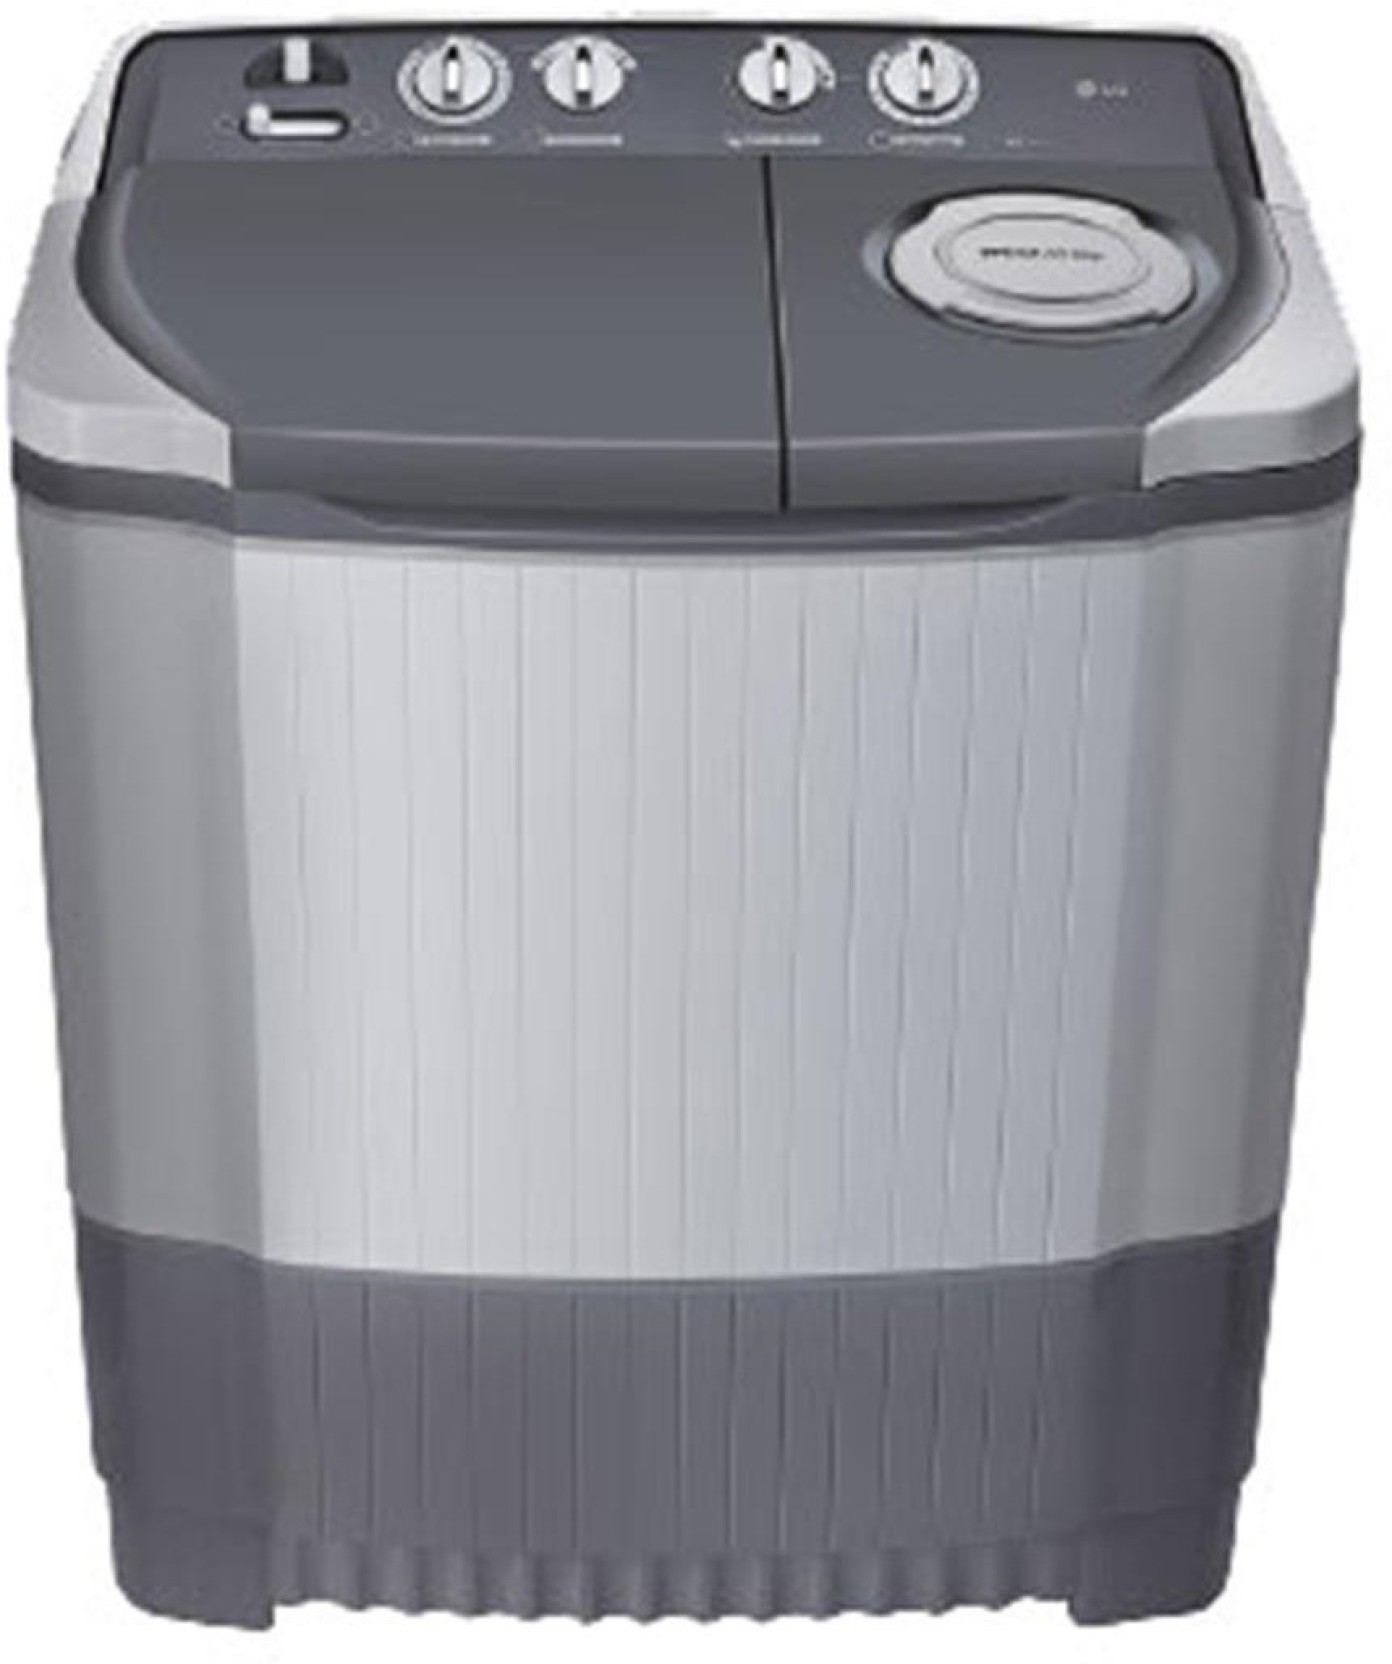 LG 6.5 kg Semi Automatic Top Load Washing Machine Grey Price in India Buy LG 6.5 kg Semi